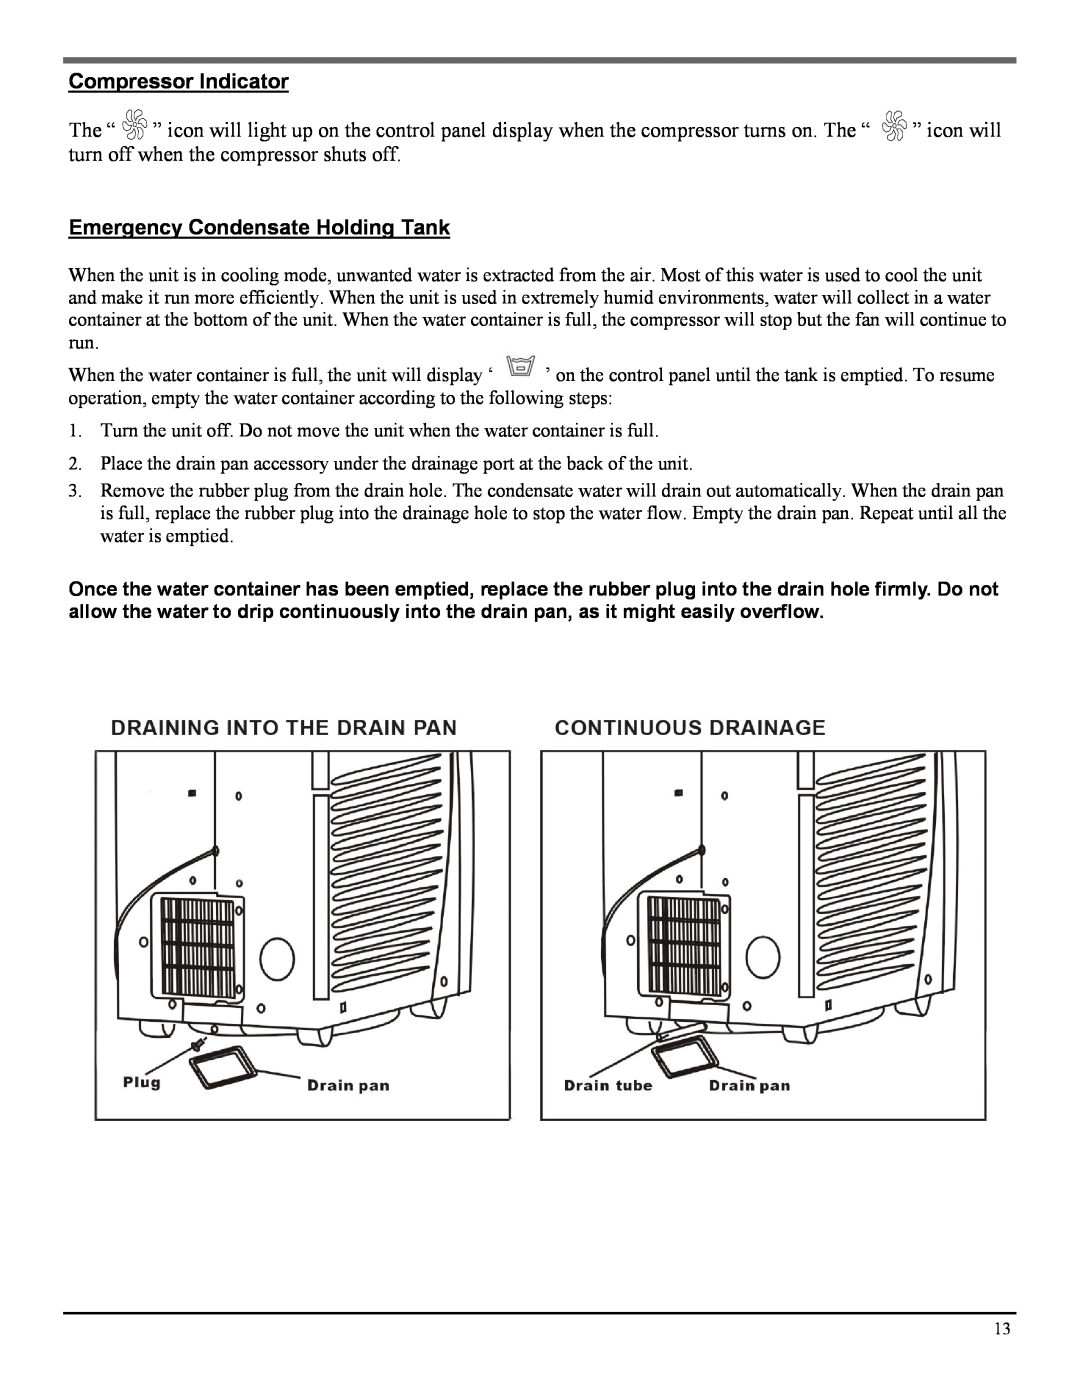 Soleus Air PH3-09R-03, PH3-10R-03 manual Compressor Indicator, Emergency Condensate Holding Tank 